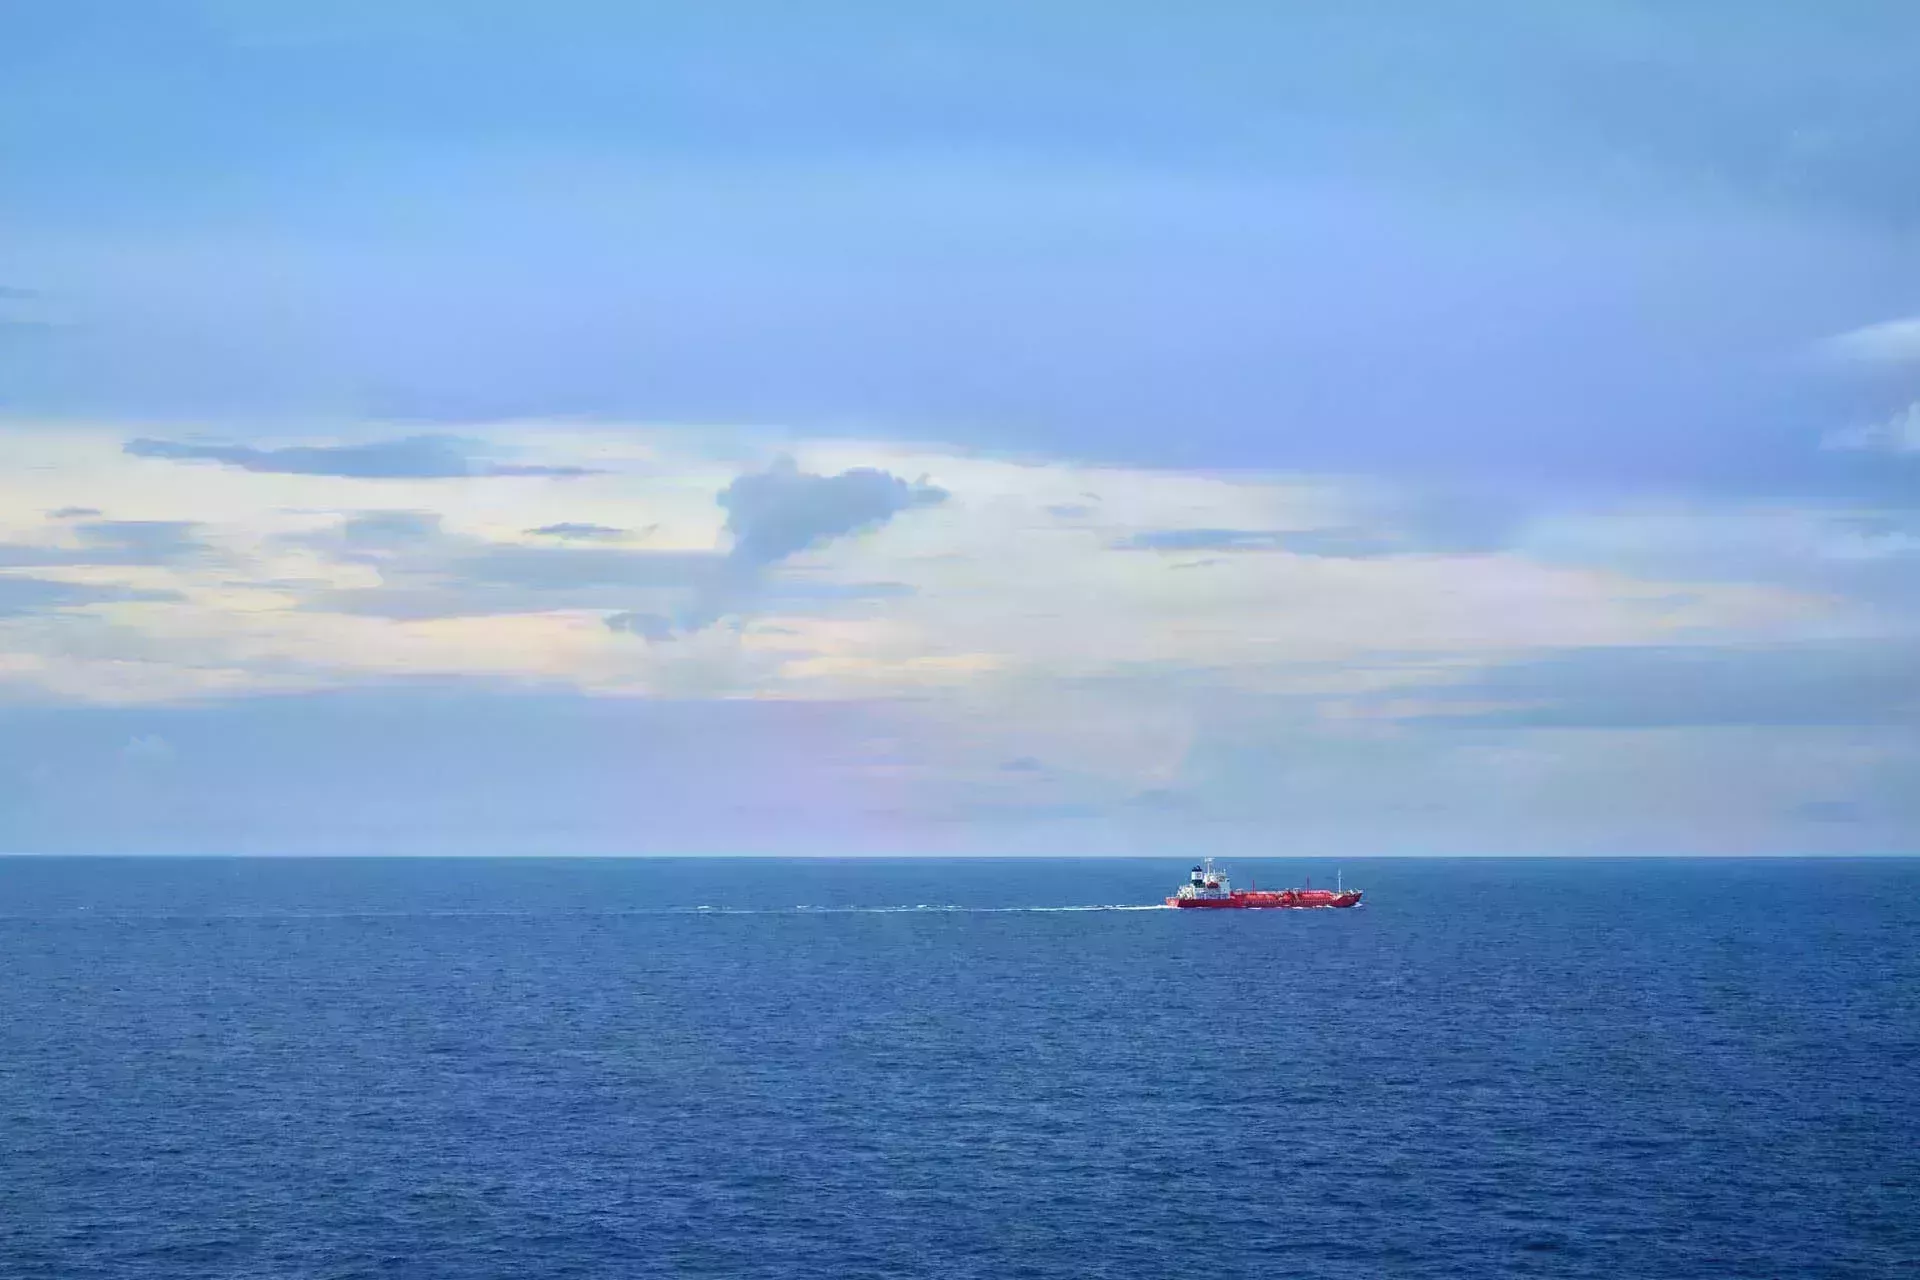 Ship on horizon against pale blue sky